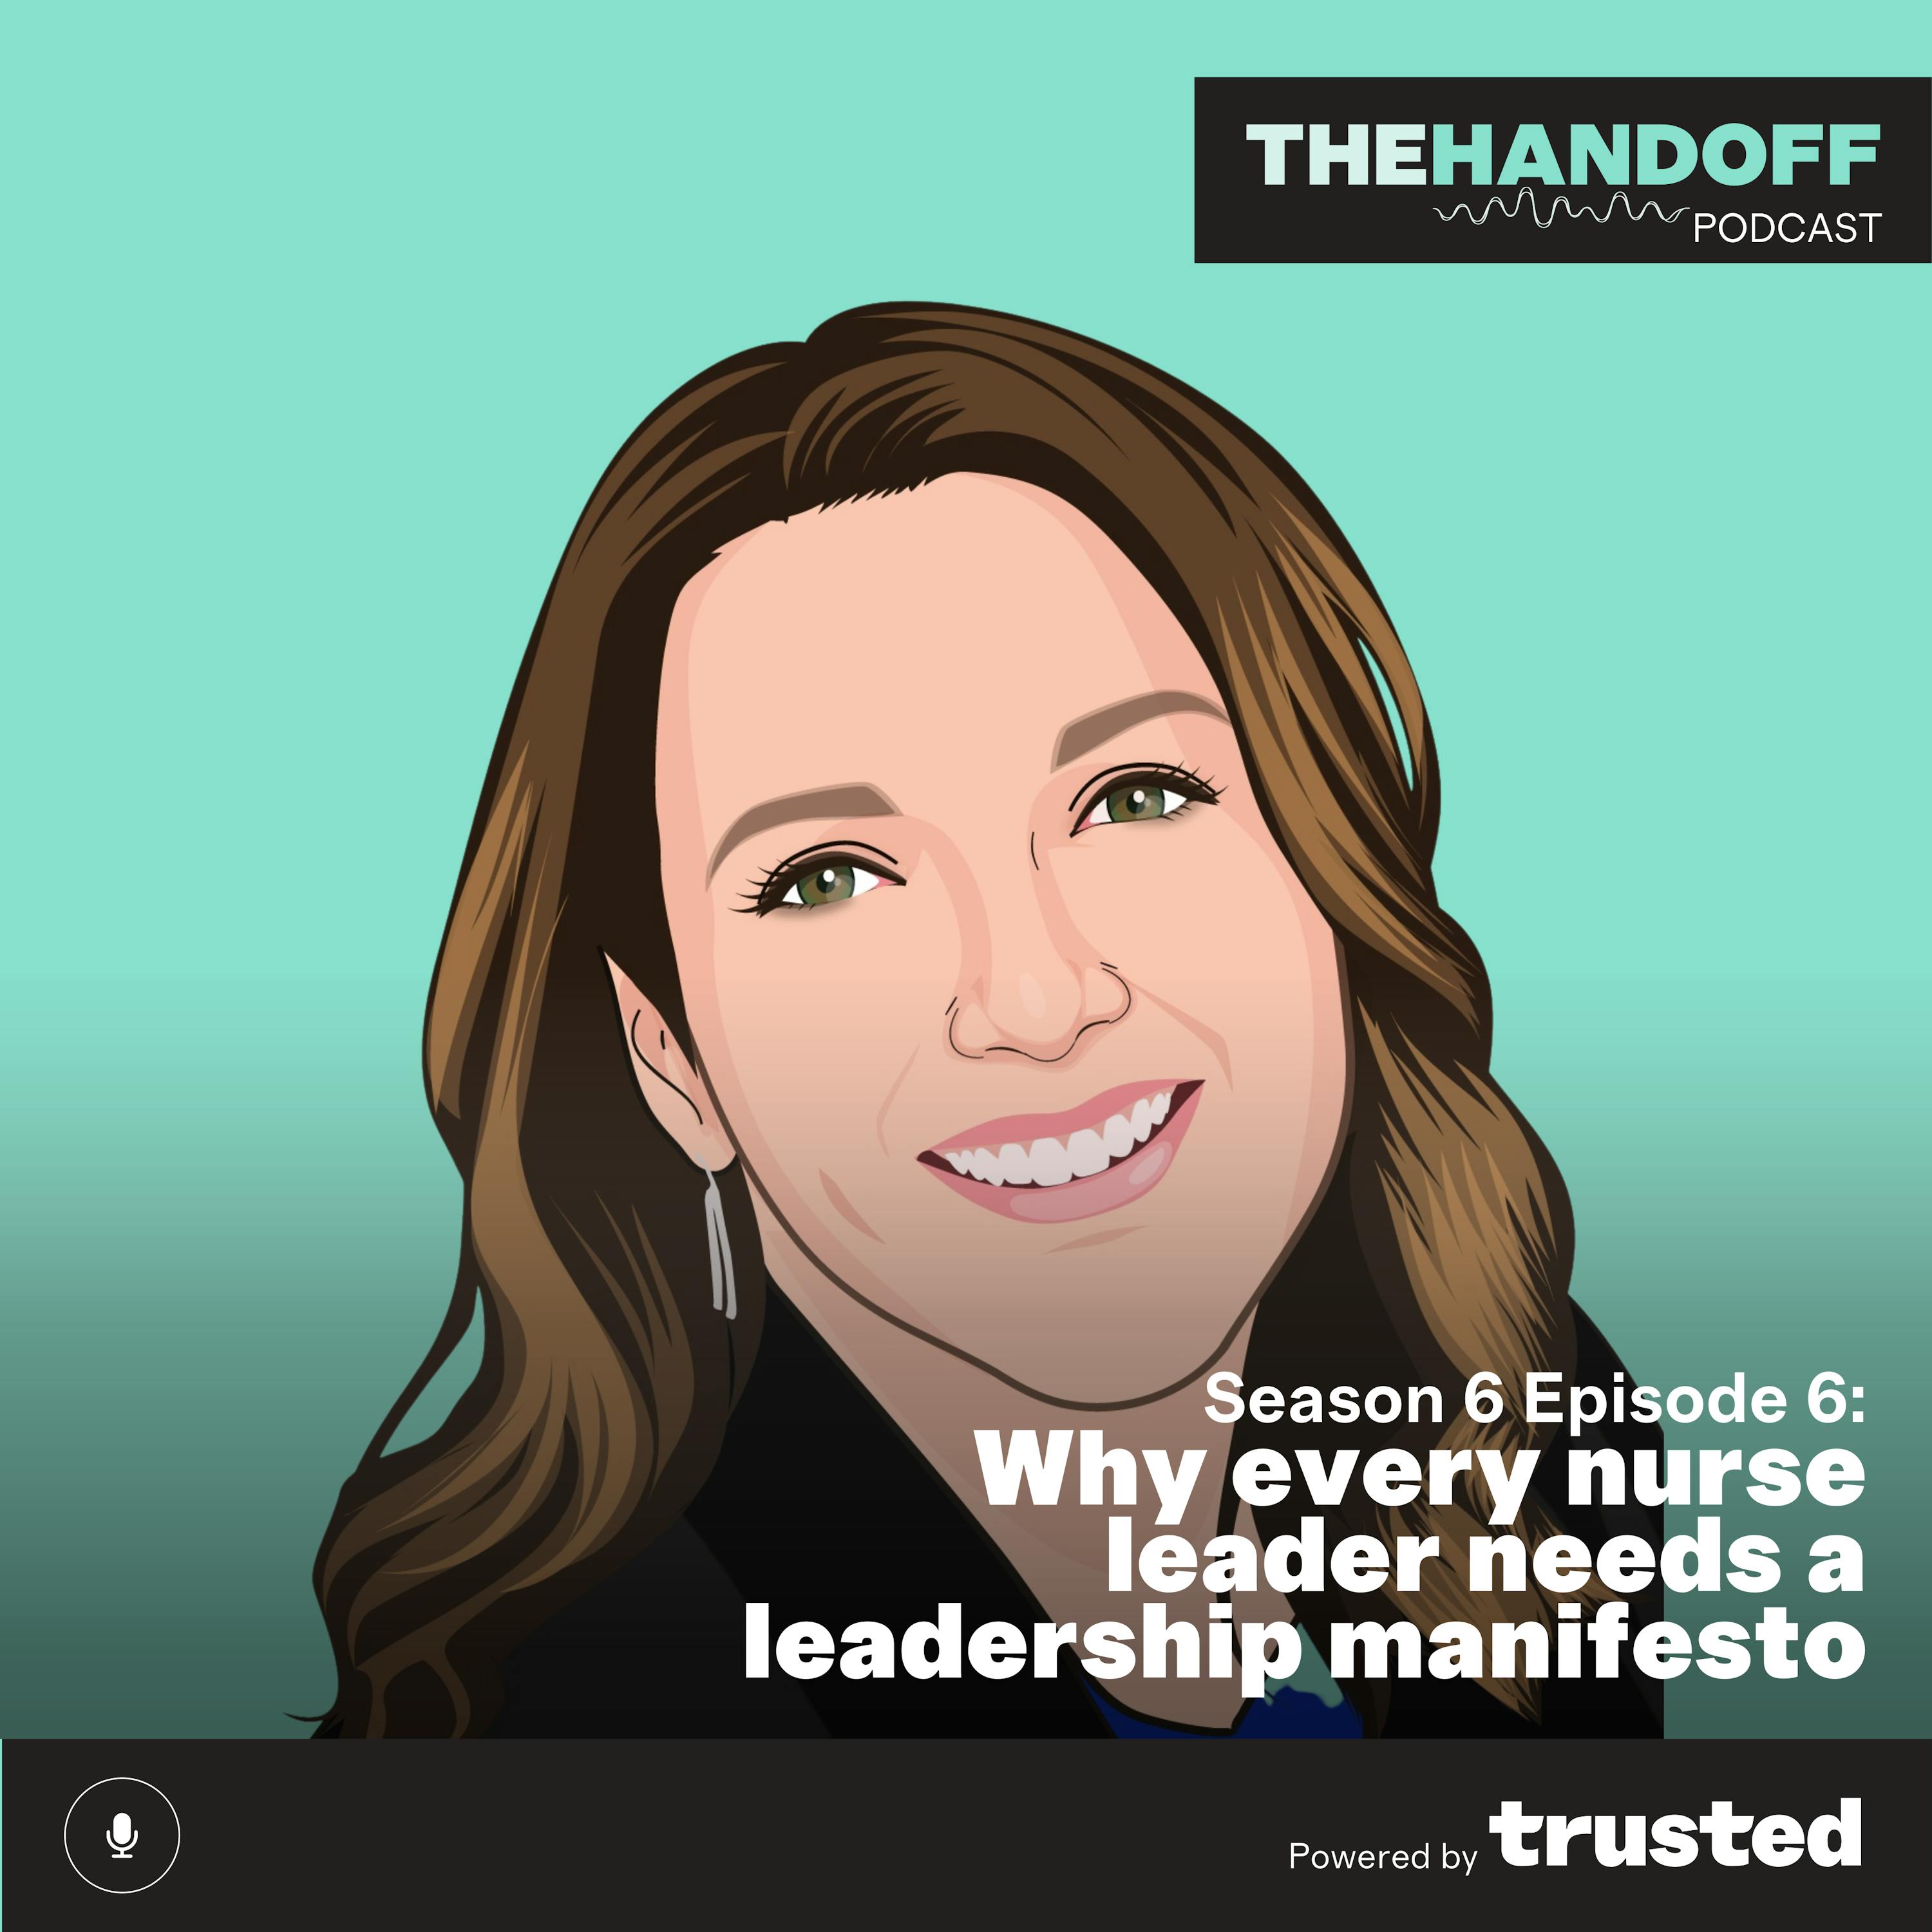 The Handoff Podcast: Why every nurse leader needs a leadership manifesto